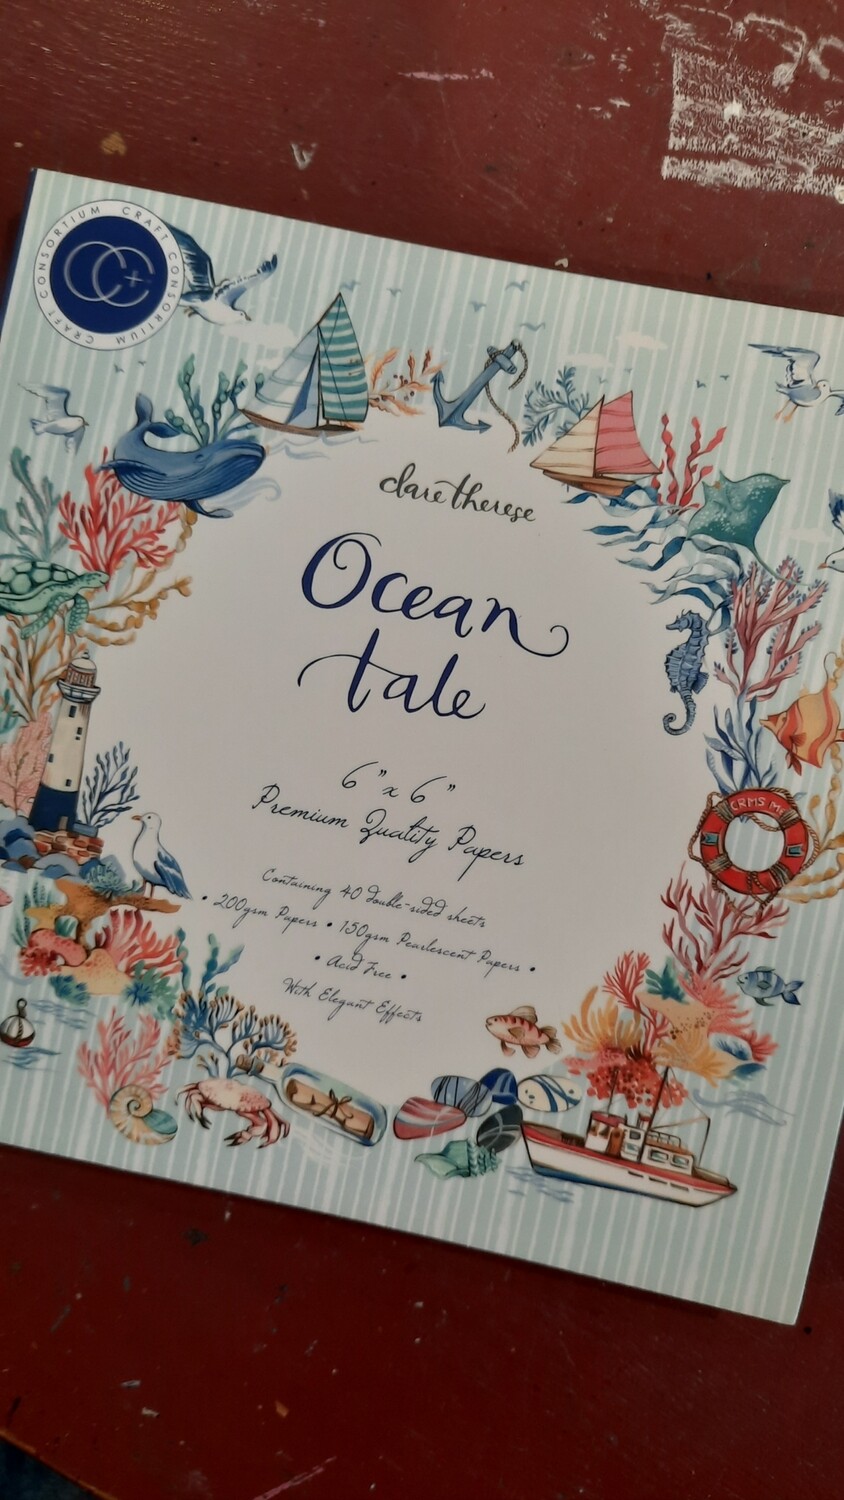 Ocean tale 6x6 pad